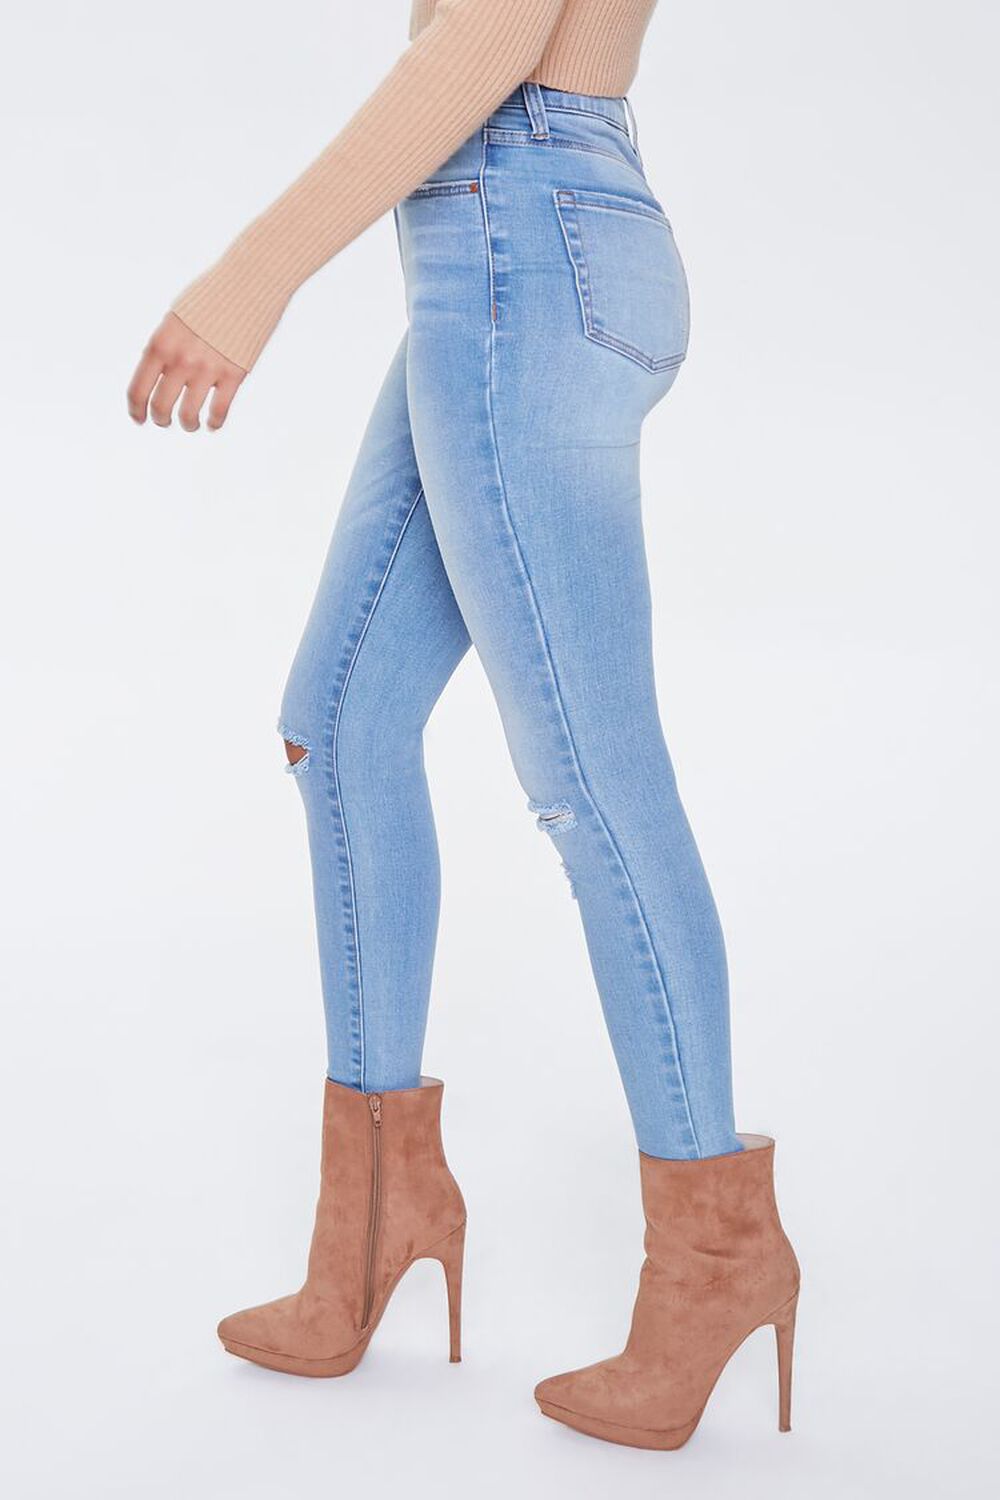 MEDIUM DENIM Distressed High-Rise Jeans, image 2